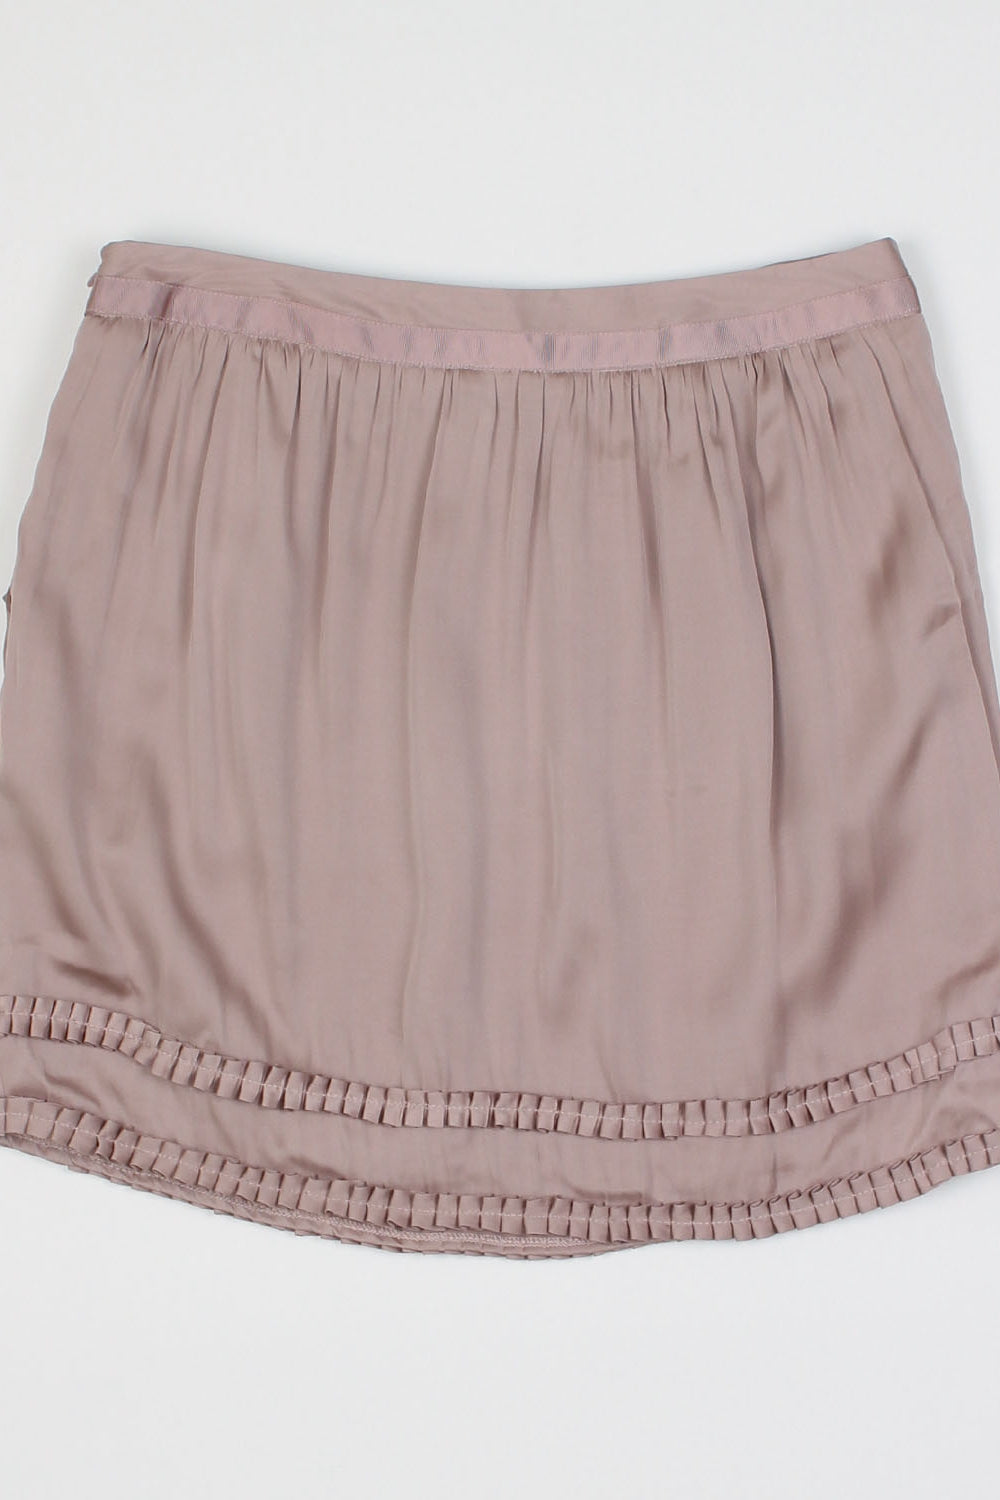 Forever New Pink Bow Detail Skirt 14